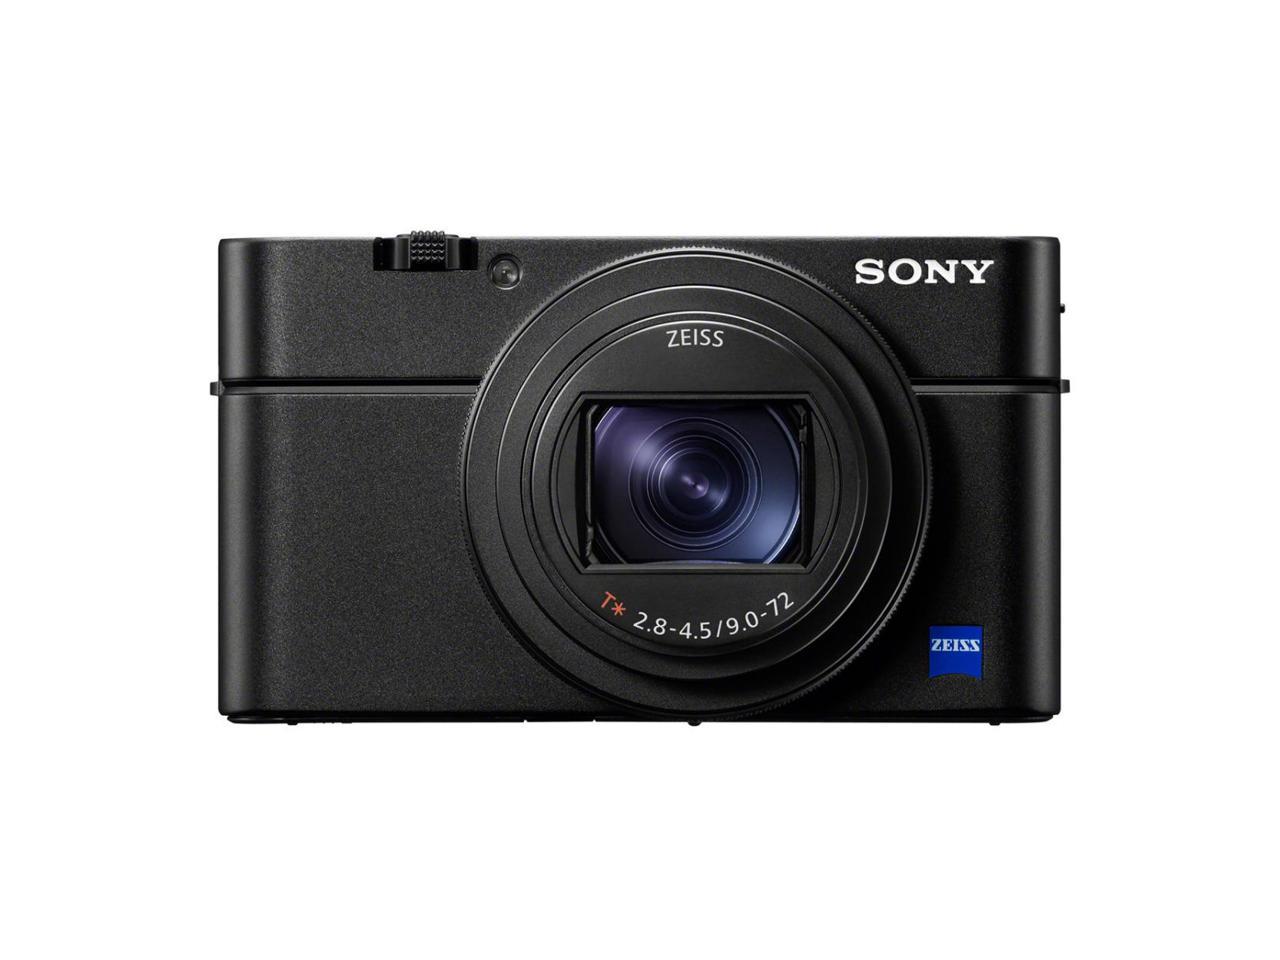 Sony Cyber-shot DSC-RX100 VII - 20.1MP Point & Shoot Digital Camera - Black